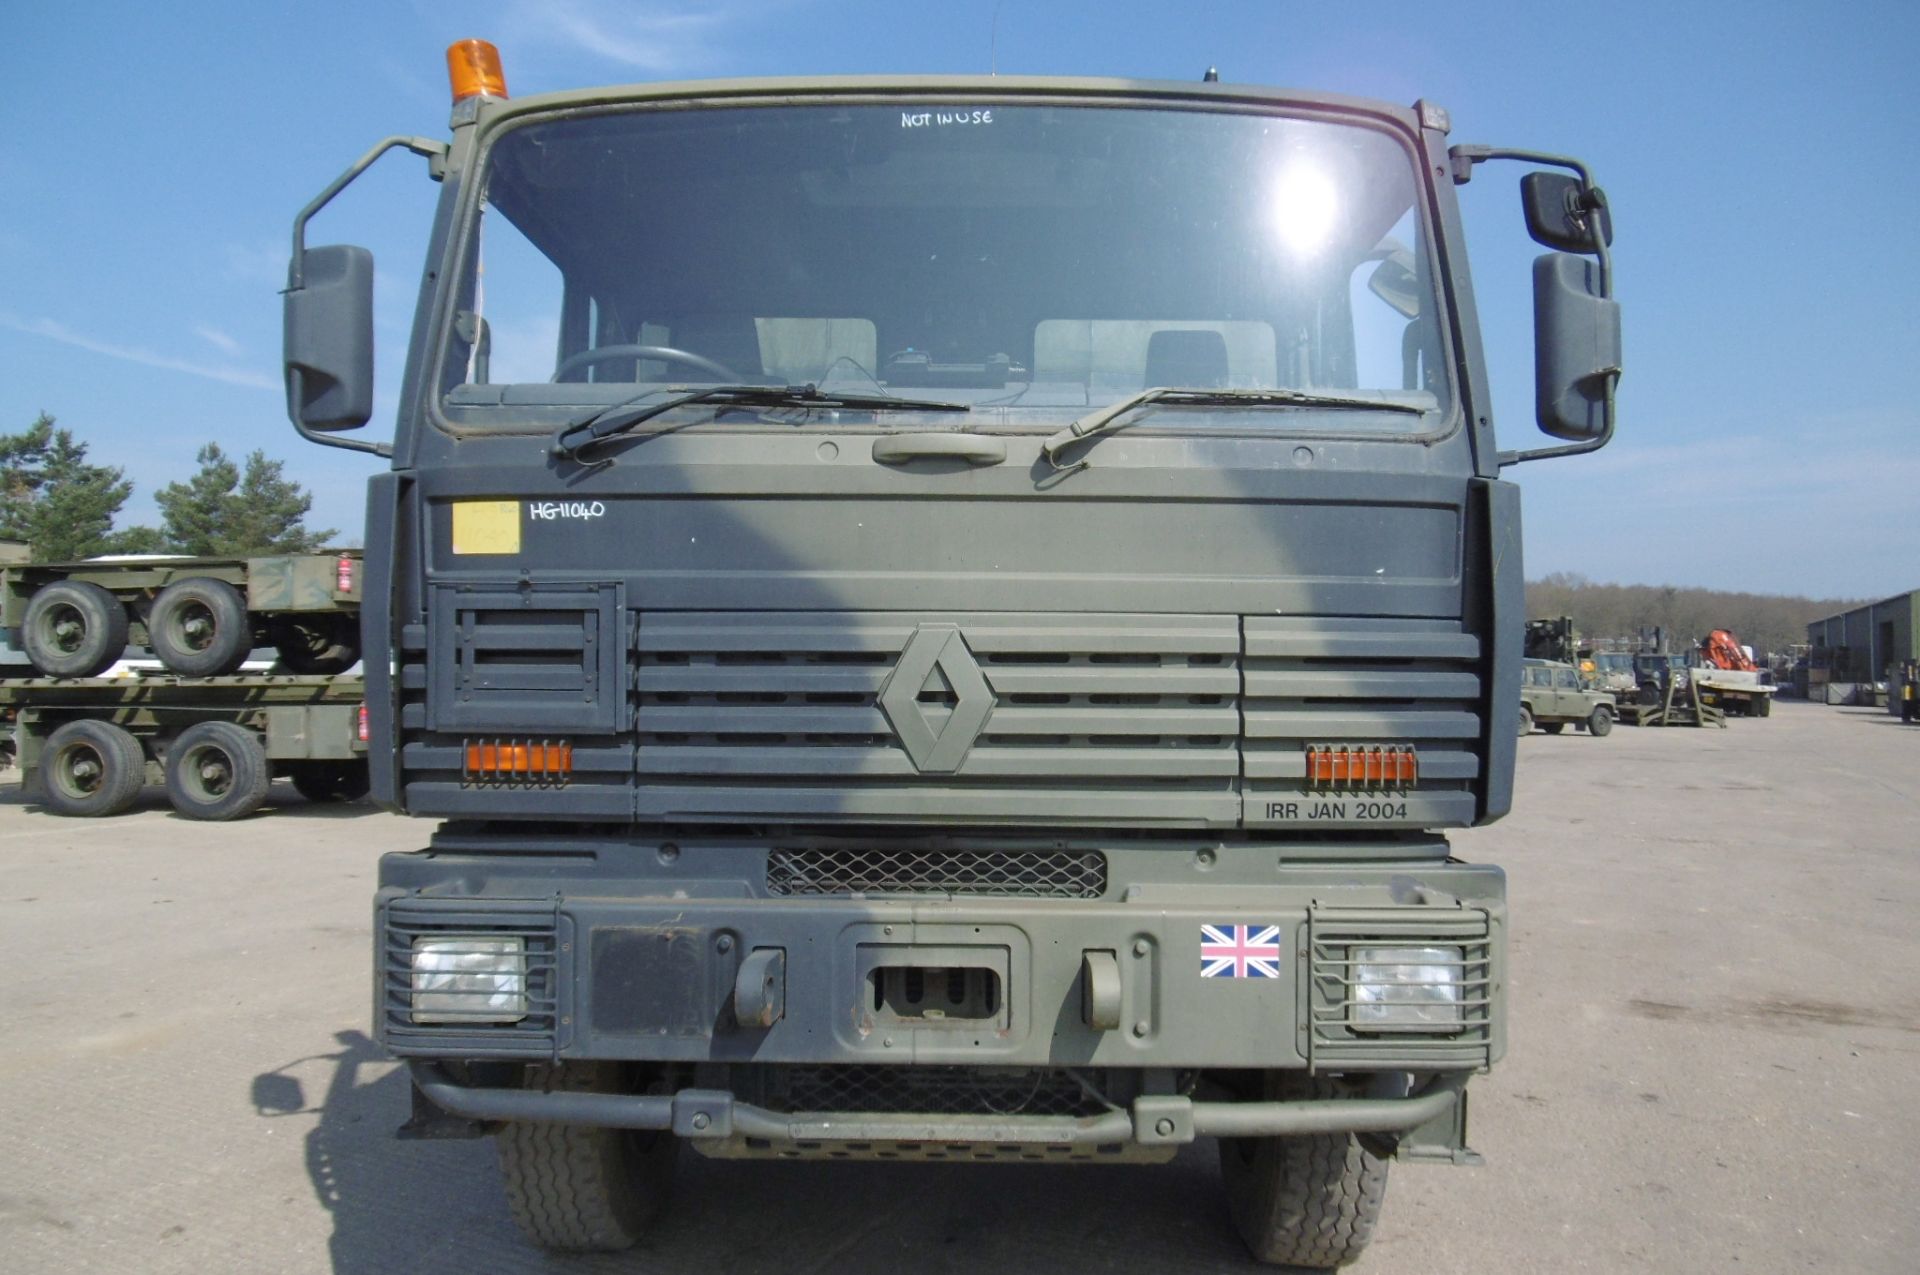 Renault G300 Maxter RHD 4x4 8T Cargo Truck - Image 2 of 15